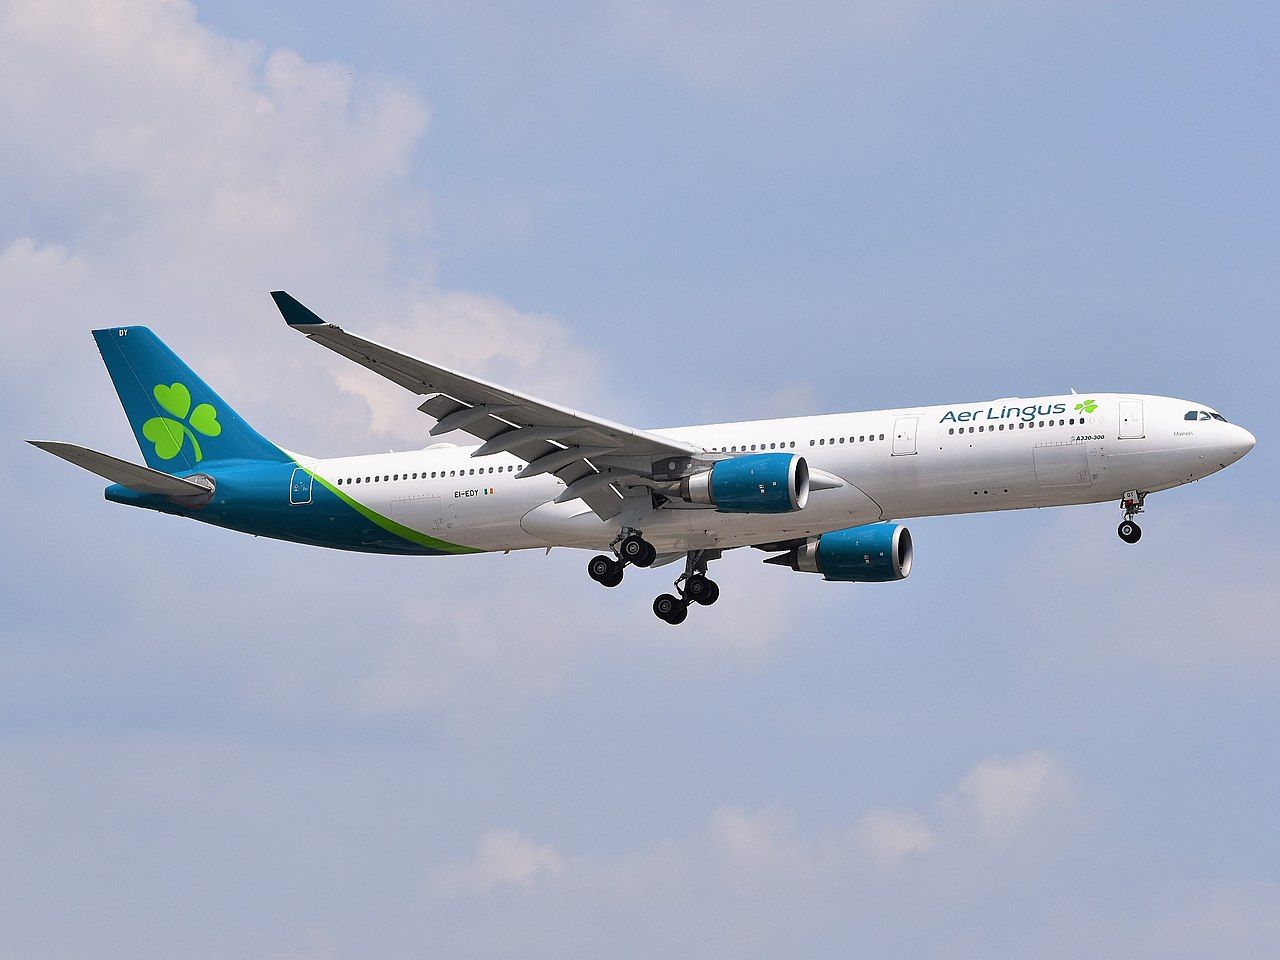 An Aer Lingus Airbus A330-302 approaching EWR Airport.